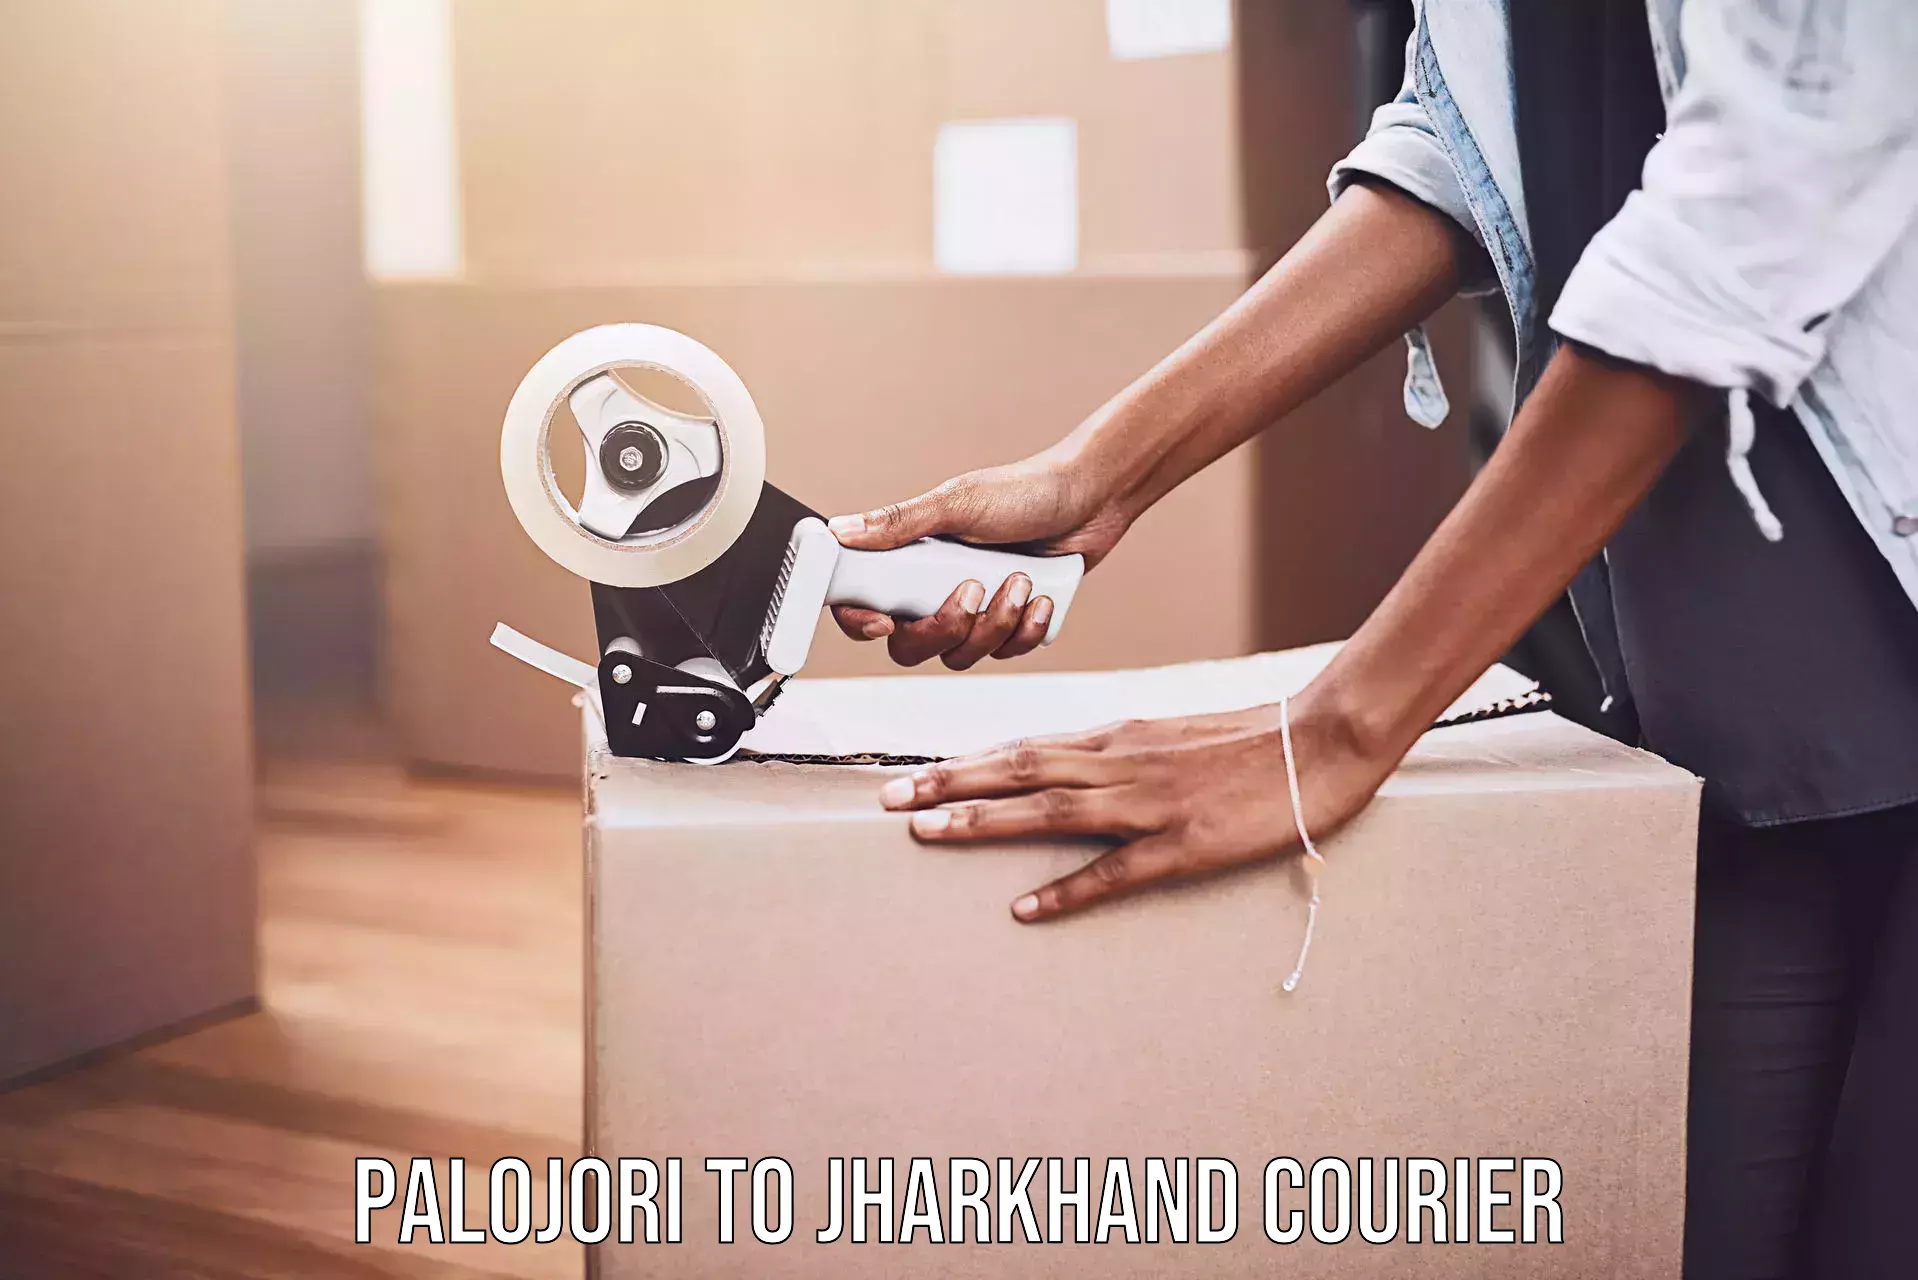 Courier service innovation Palojori to Chouparan